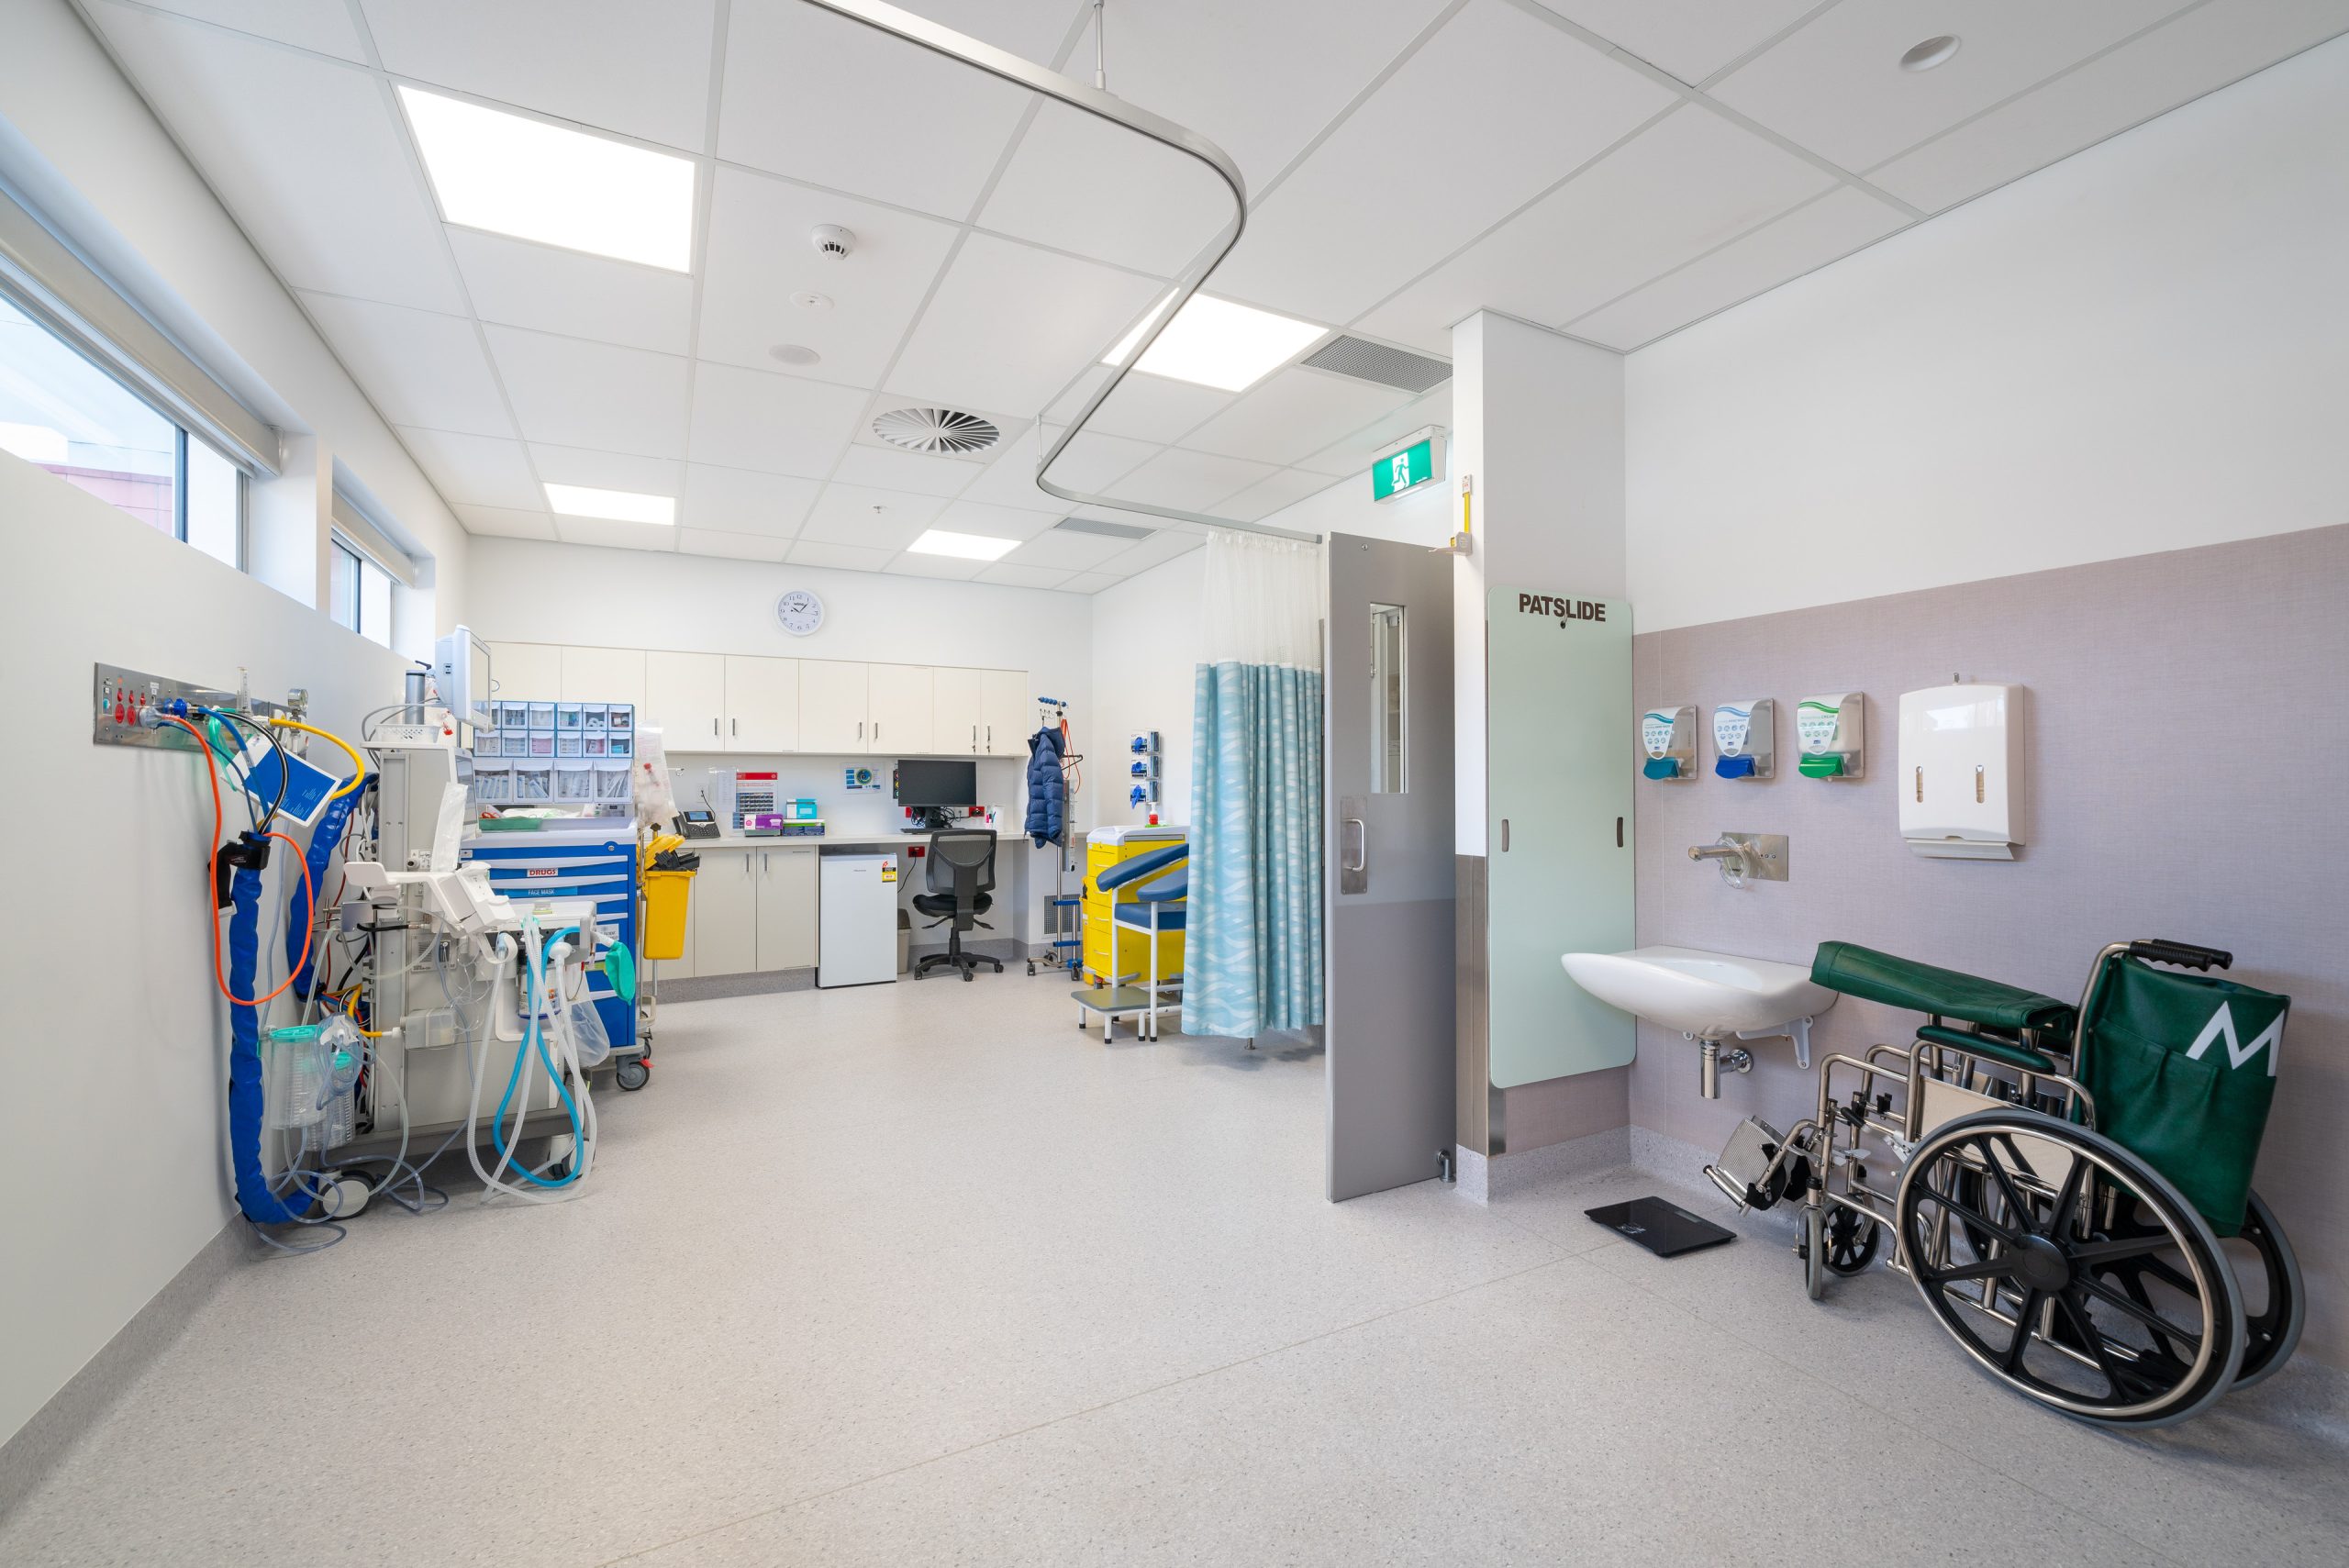 7 anaesthetic prep area bathurst hospital mri imaging department extension taylor construction health